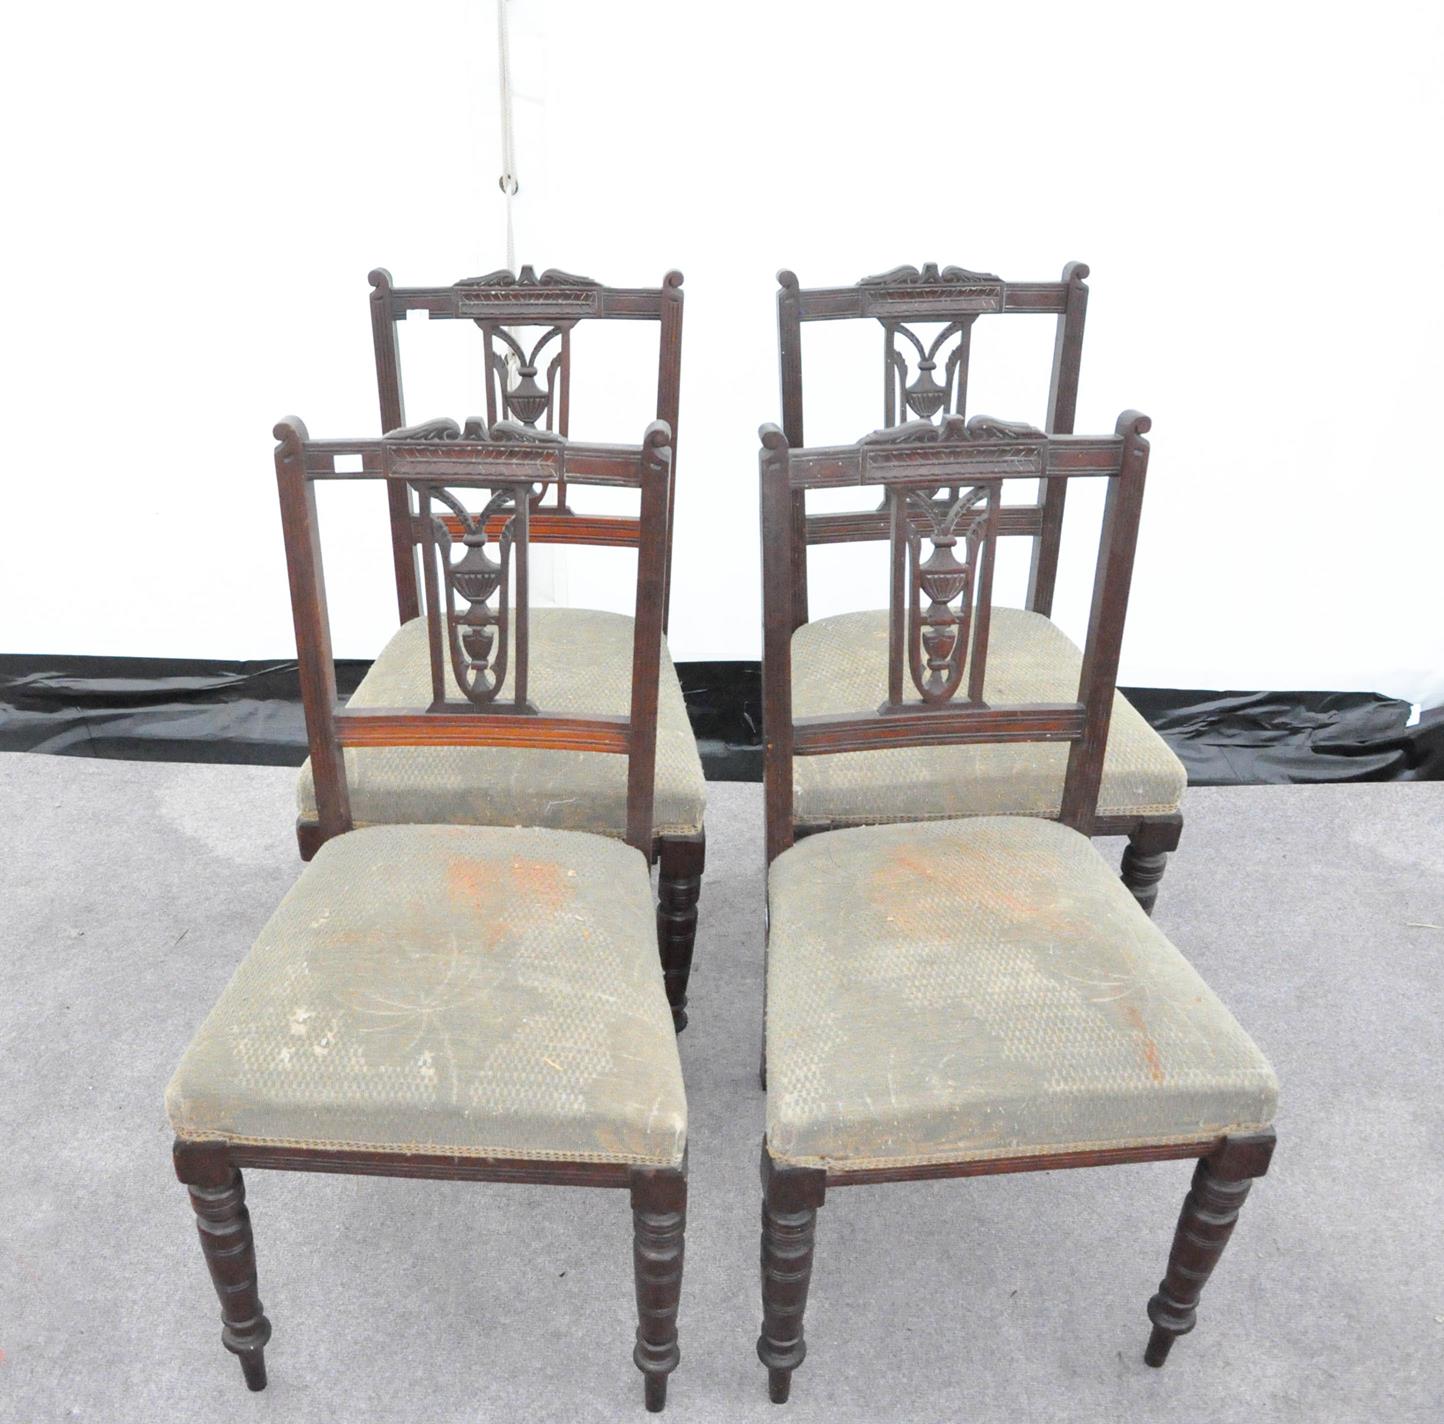 Four Edwardian mahogany chairs with vase splats